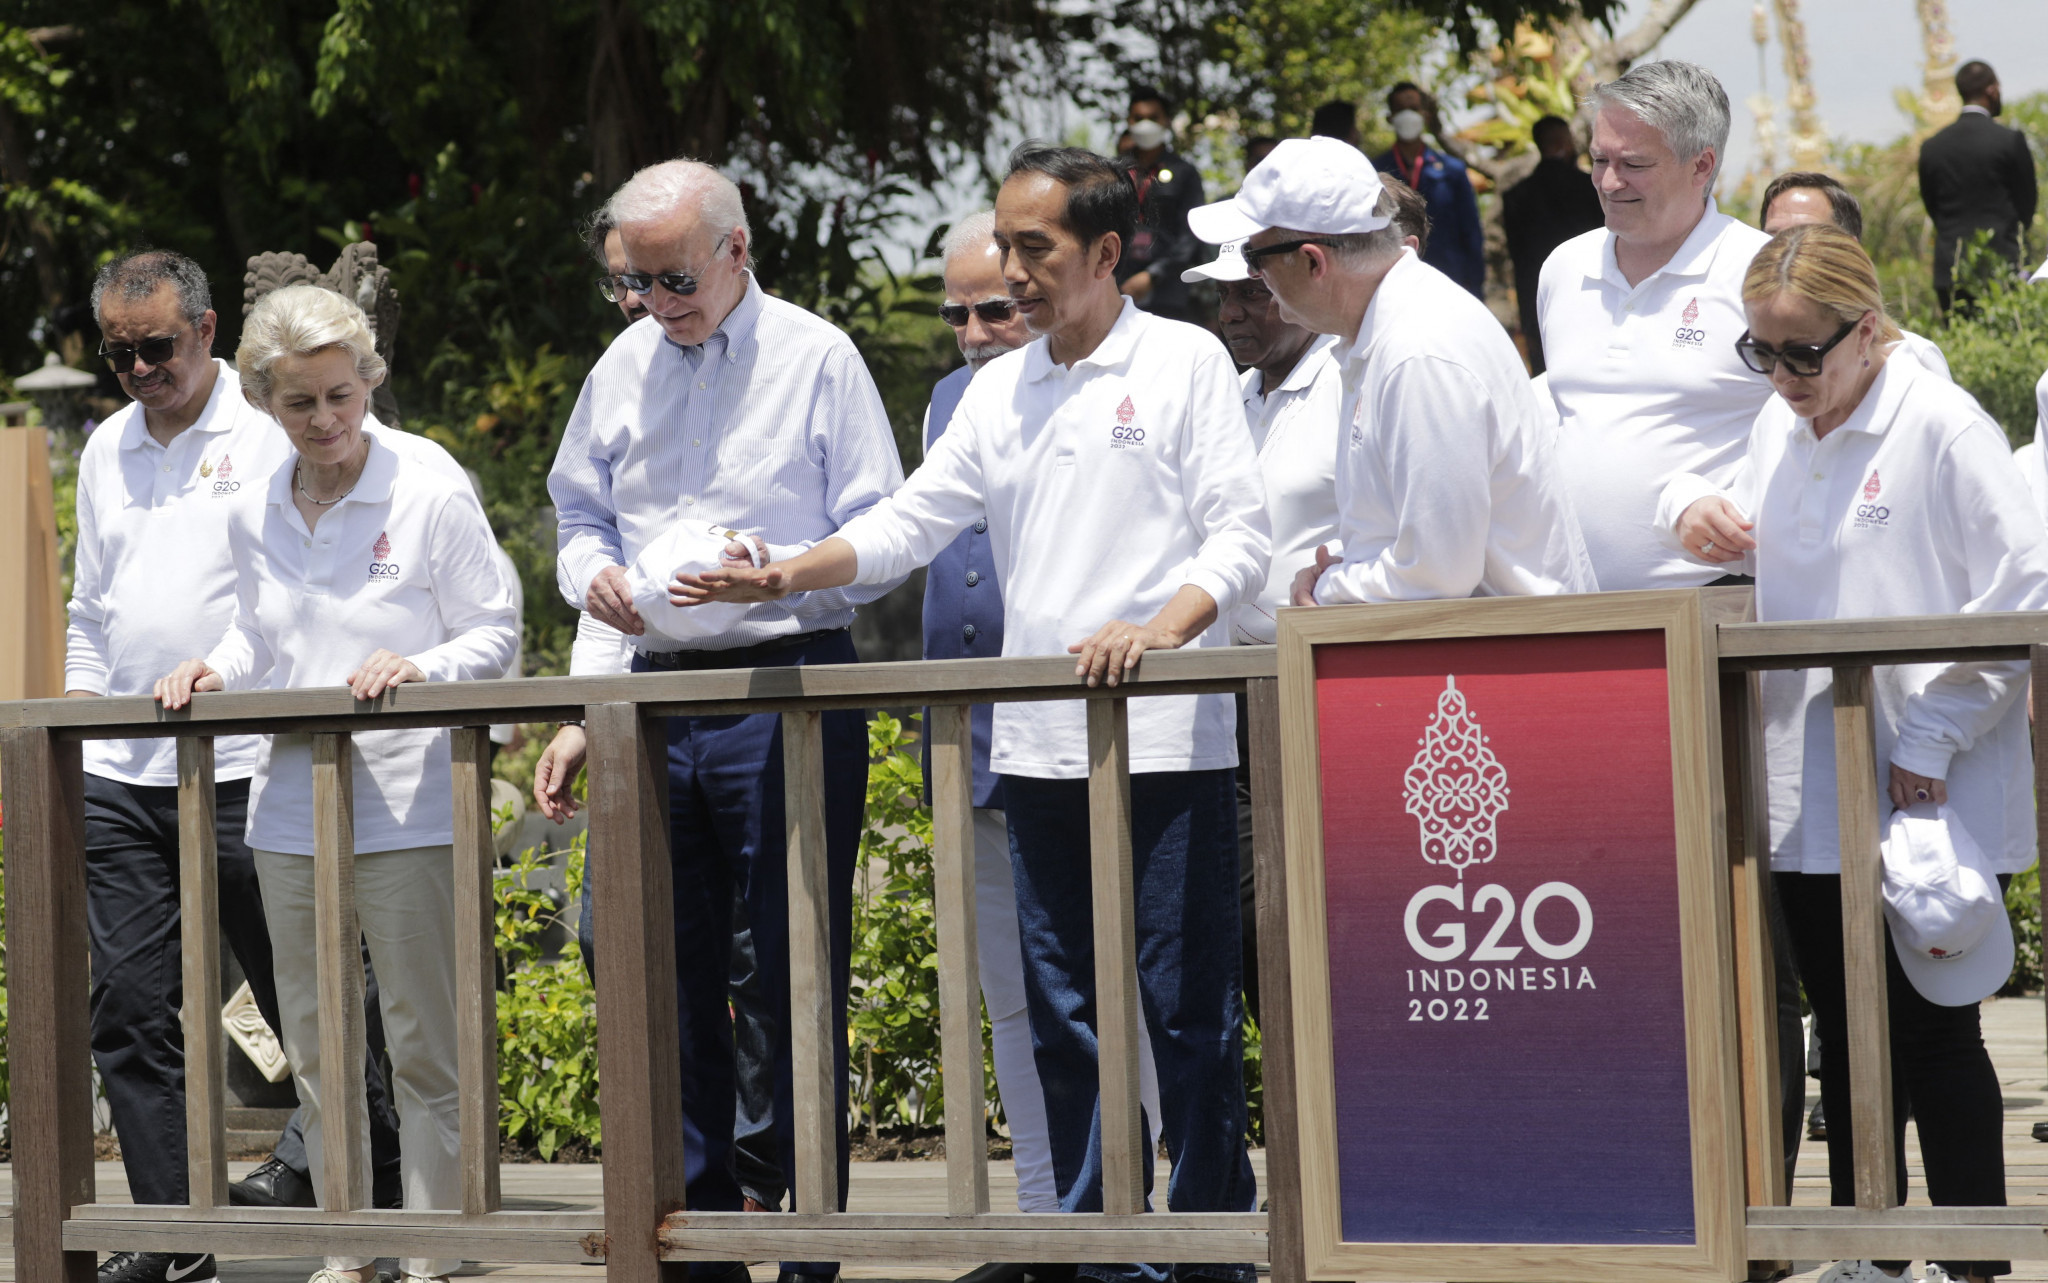 Indonesian President Joko Widodo has been hosting the G20 summit in Nusa Dua, Bali this week ©Getty Images